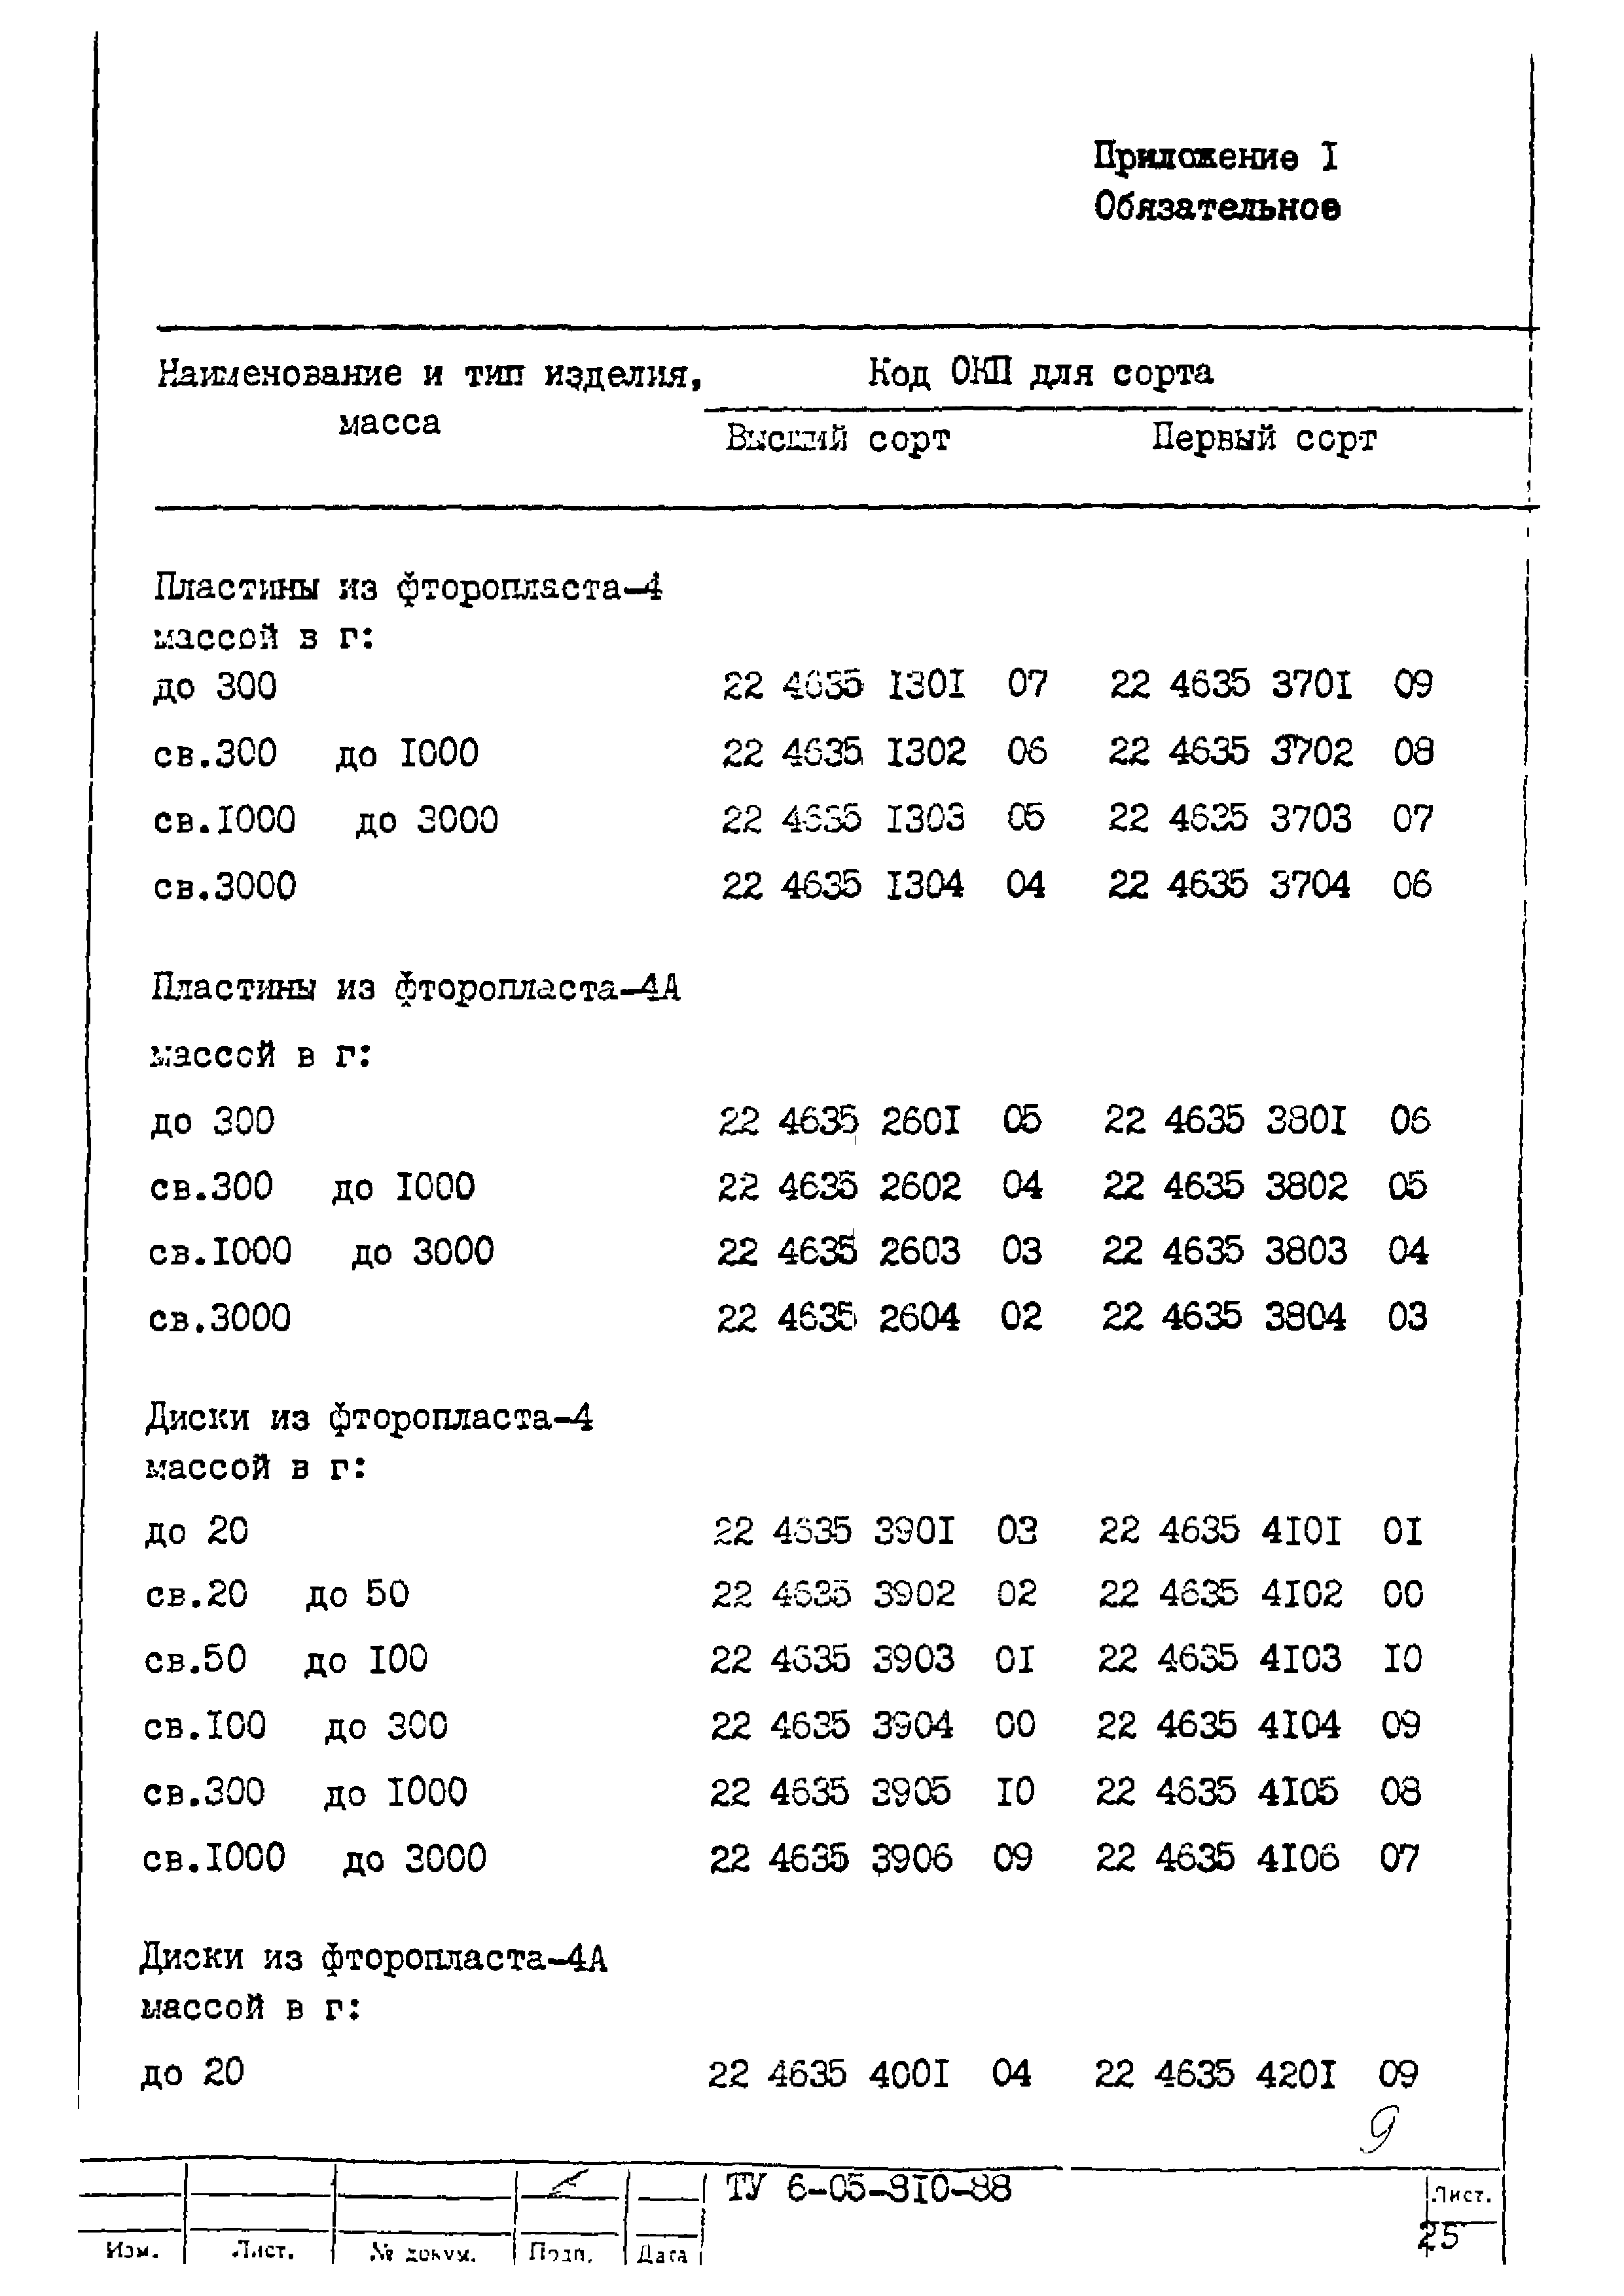 ТУ 6-05-810-88